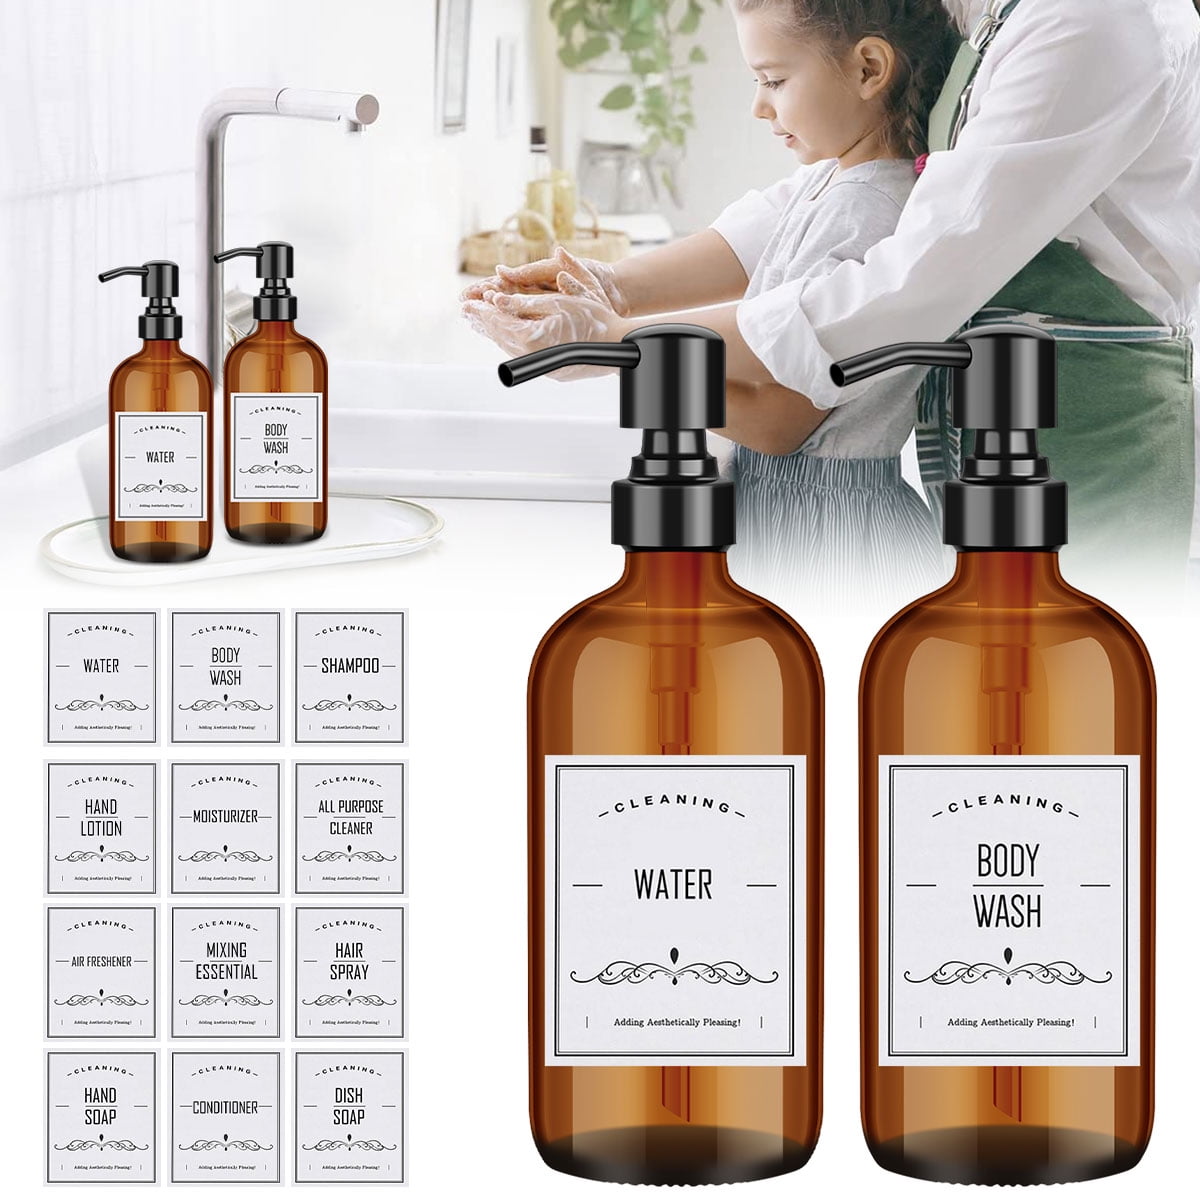 Amber Glass Apothecary Soap Dispenser - 12 oz